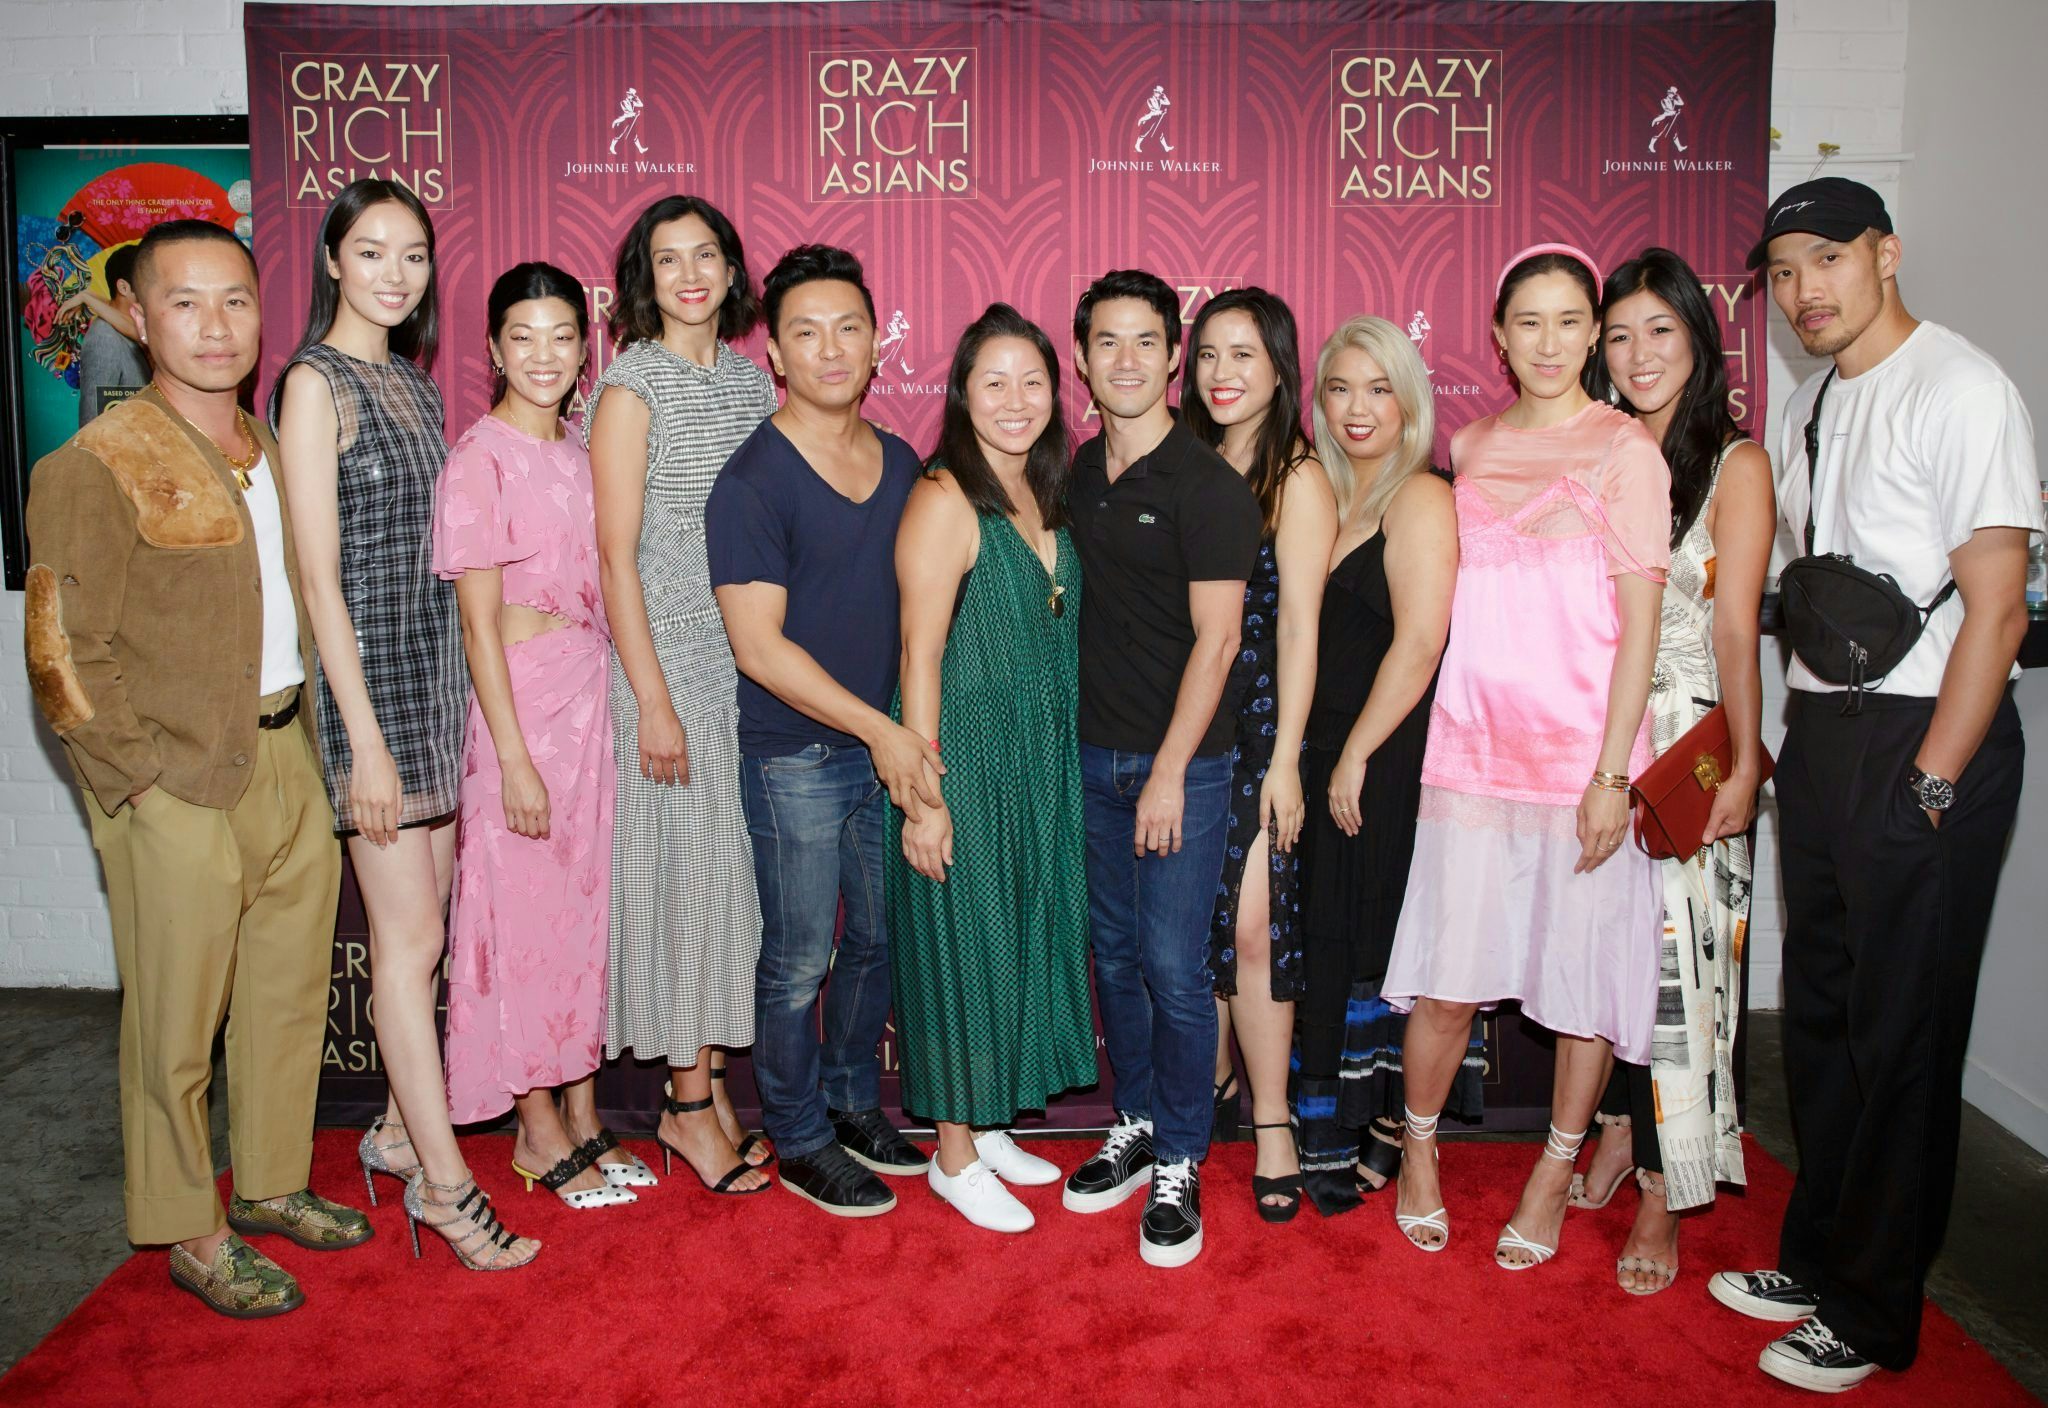 Asian American Fashion Circle Endorses Crazy Rich Asians, Fueling Public Interest